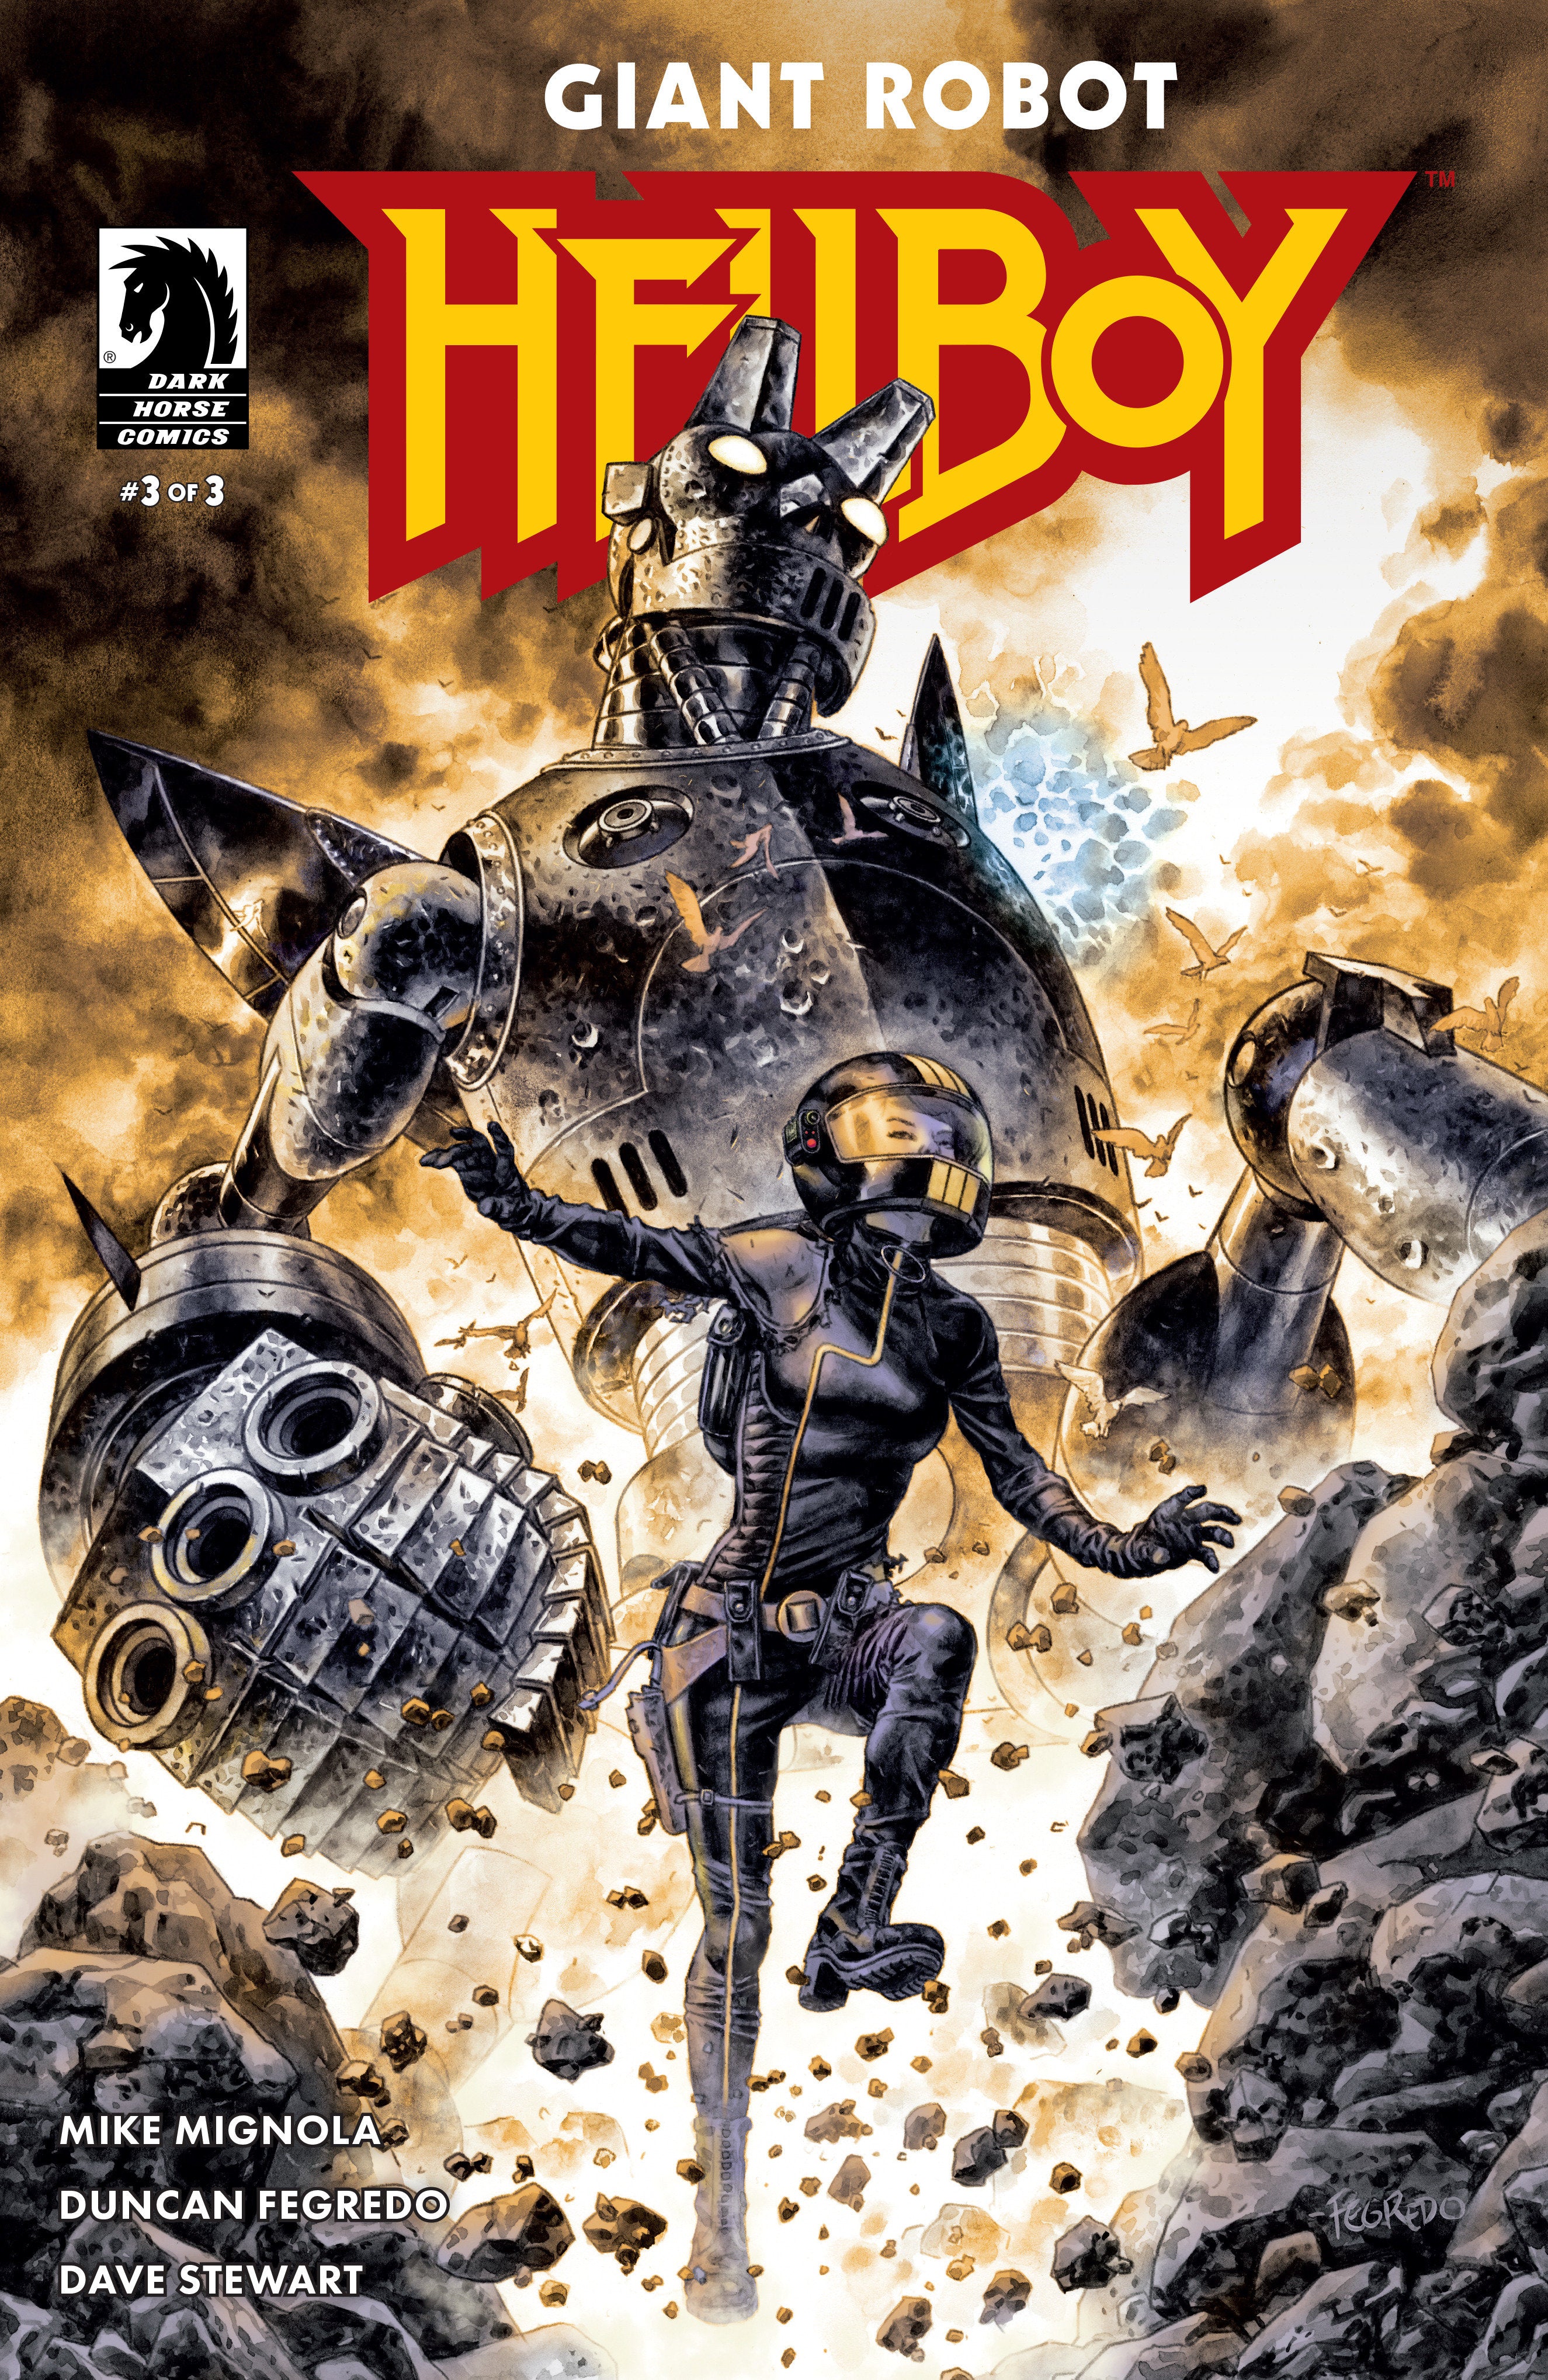 Giant Robot Hellboy #3 (Cover A) (Duncan Fegredo)